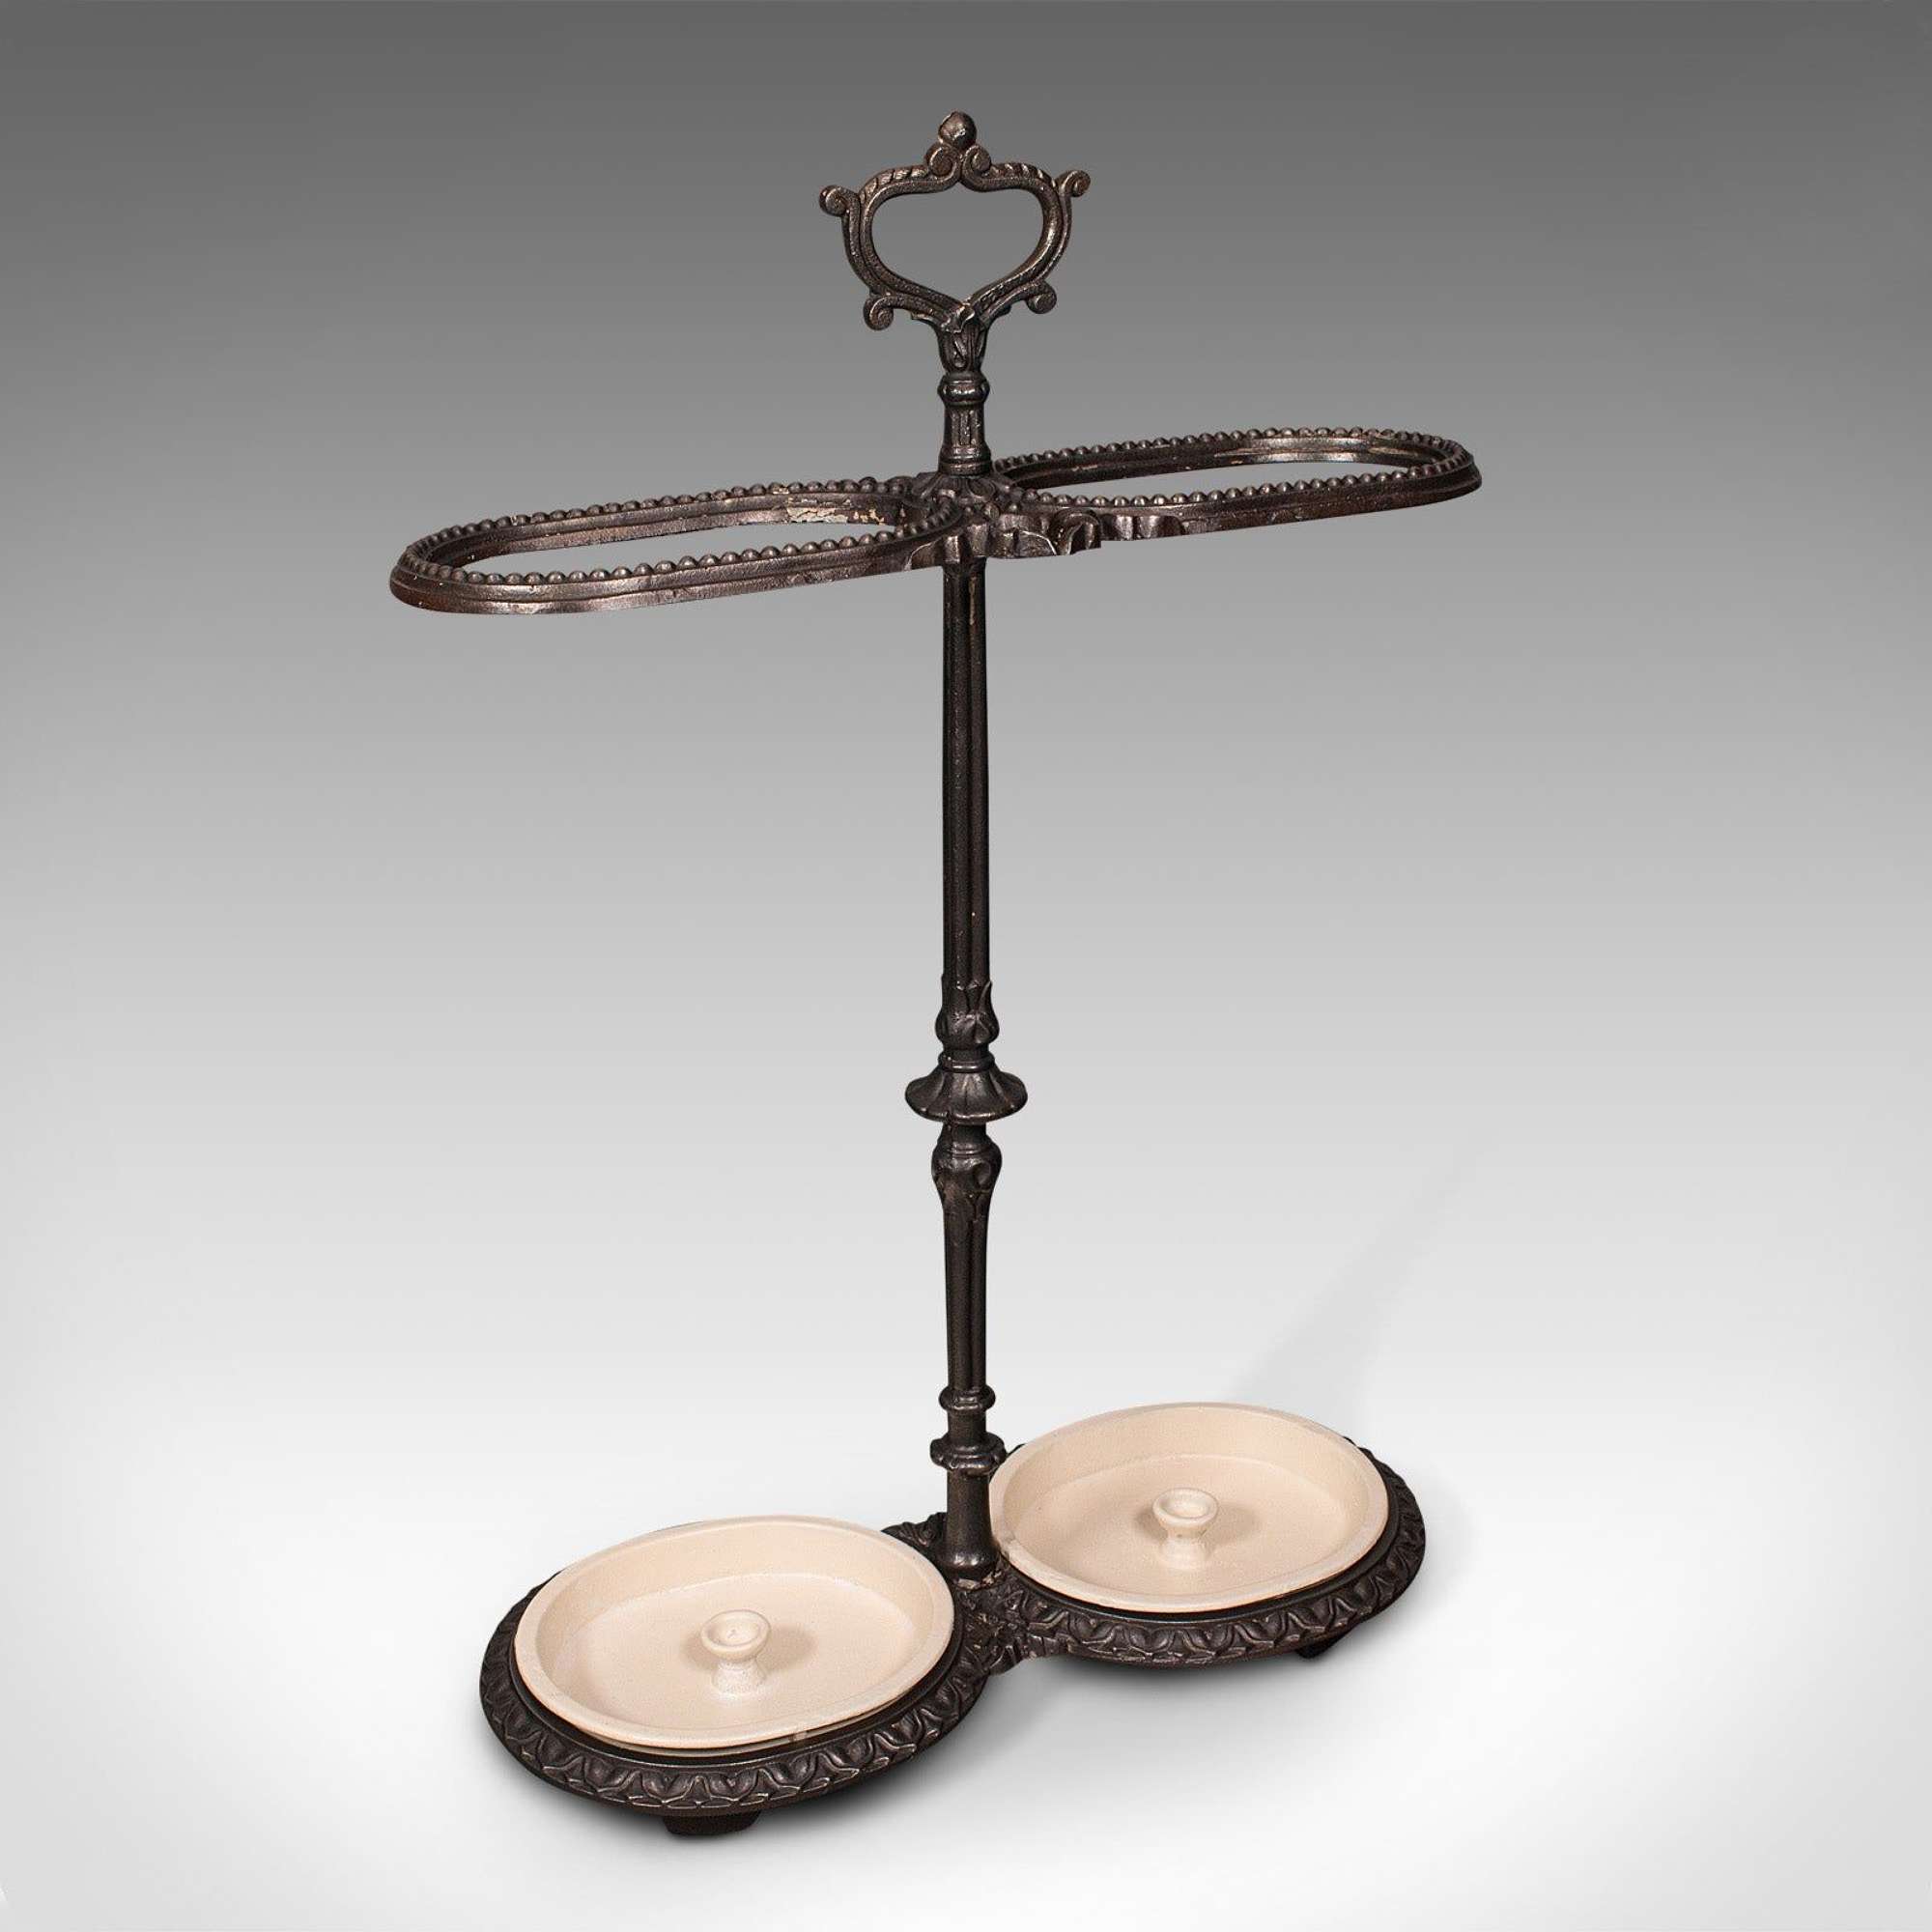 Antique Decorative Stick Stand, French, Umbrella Rack, Art Nouveau, Victorian